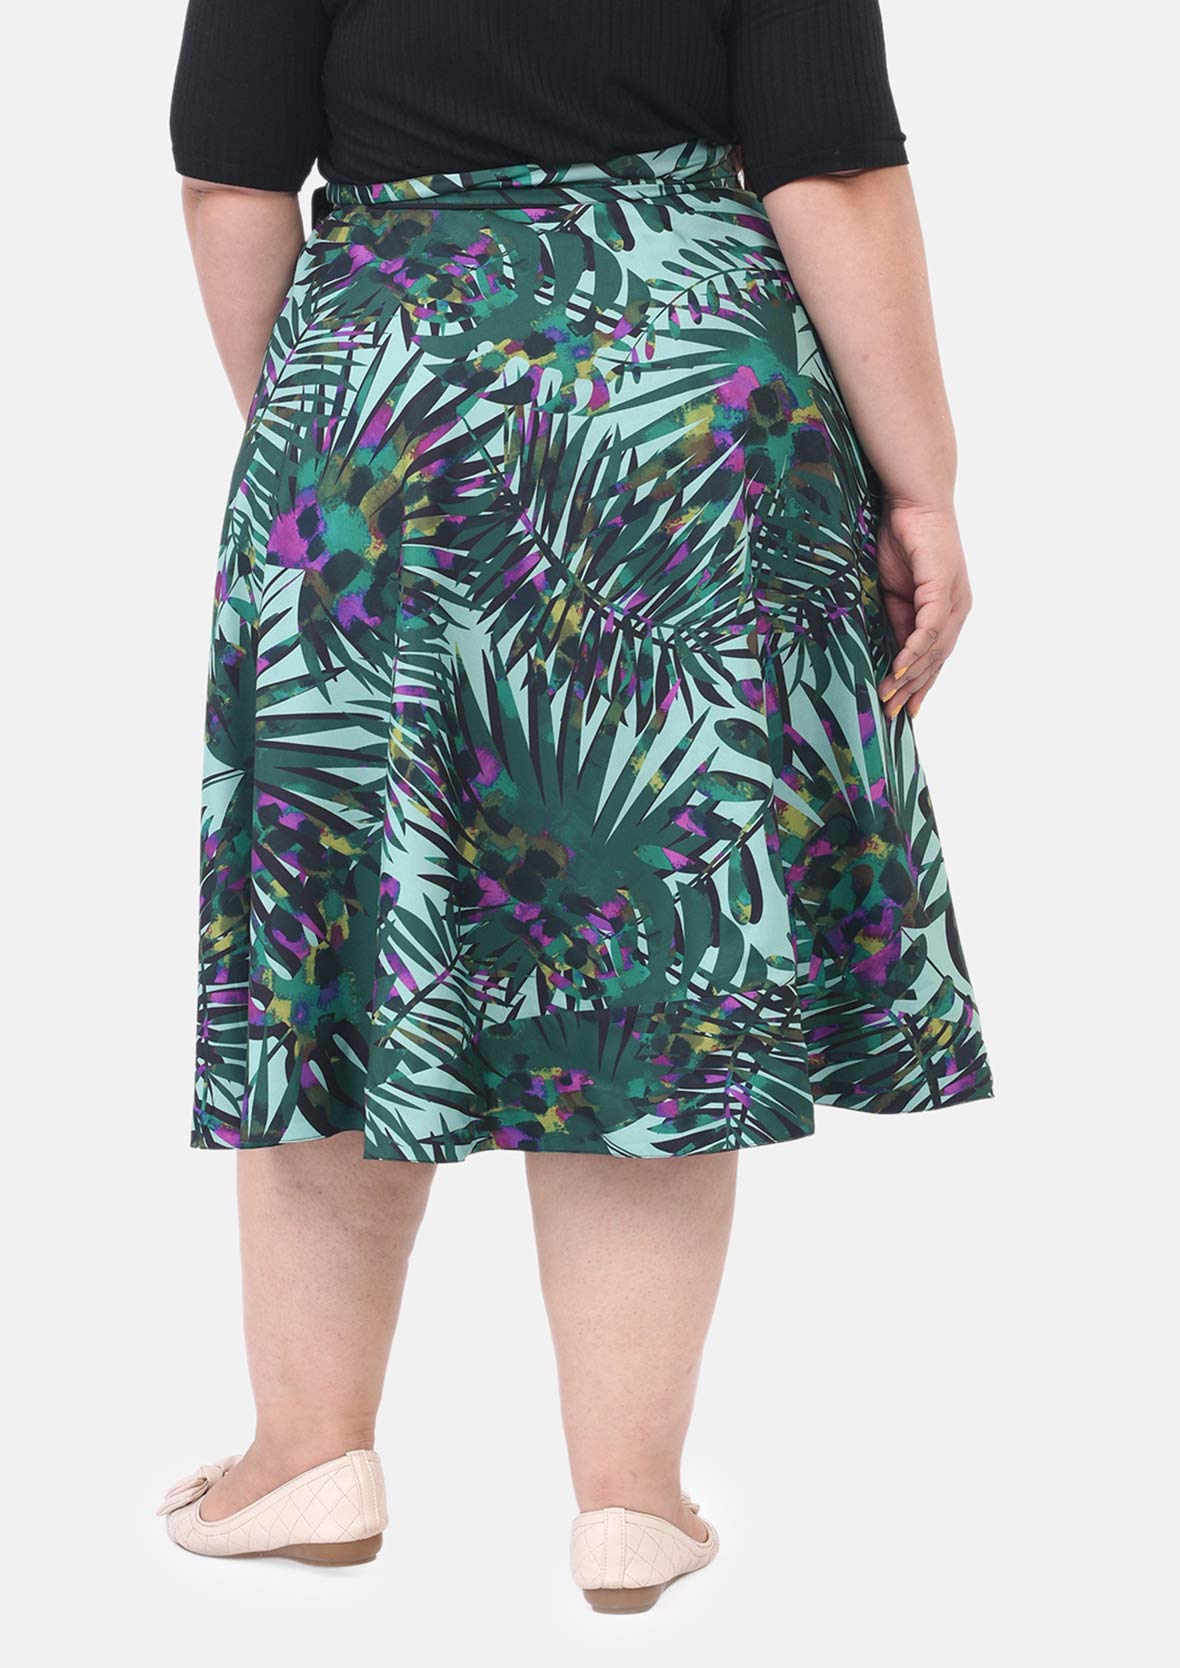 Floral Jungle Print Reversible Skirt